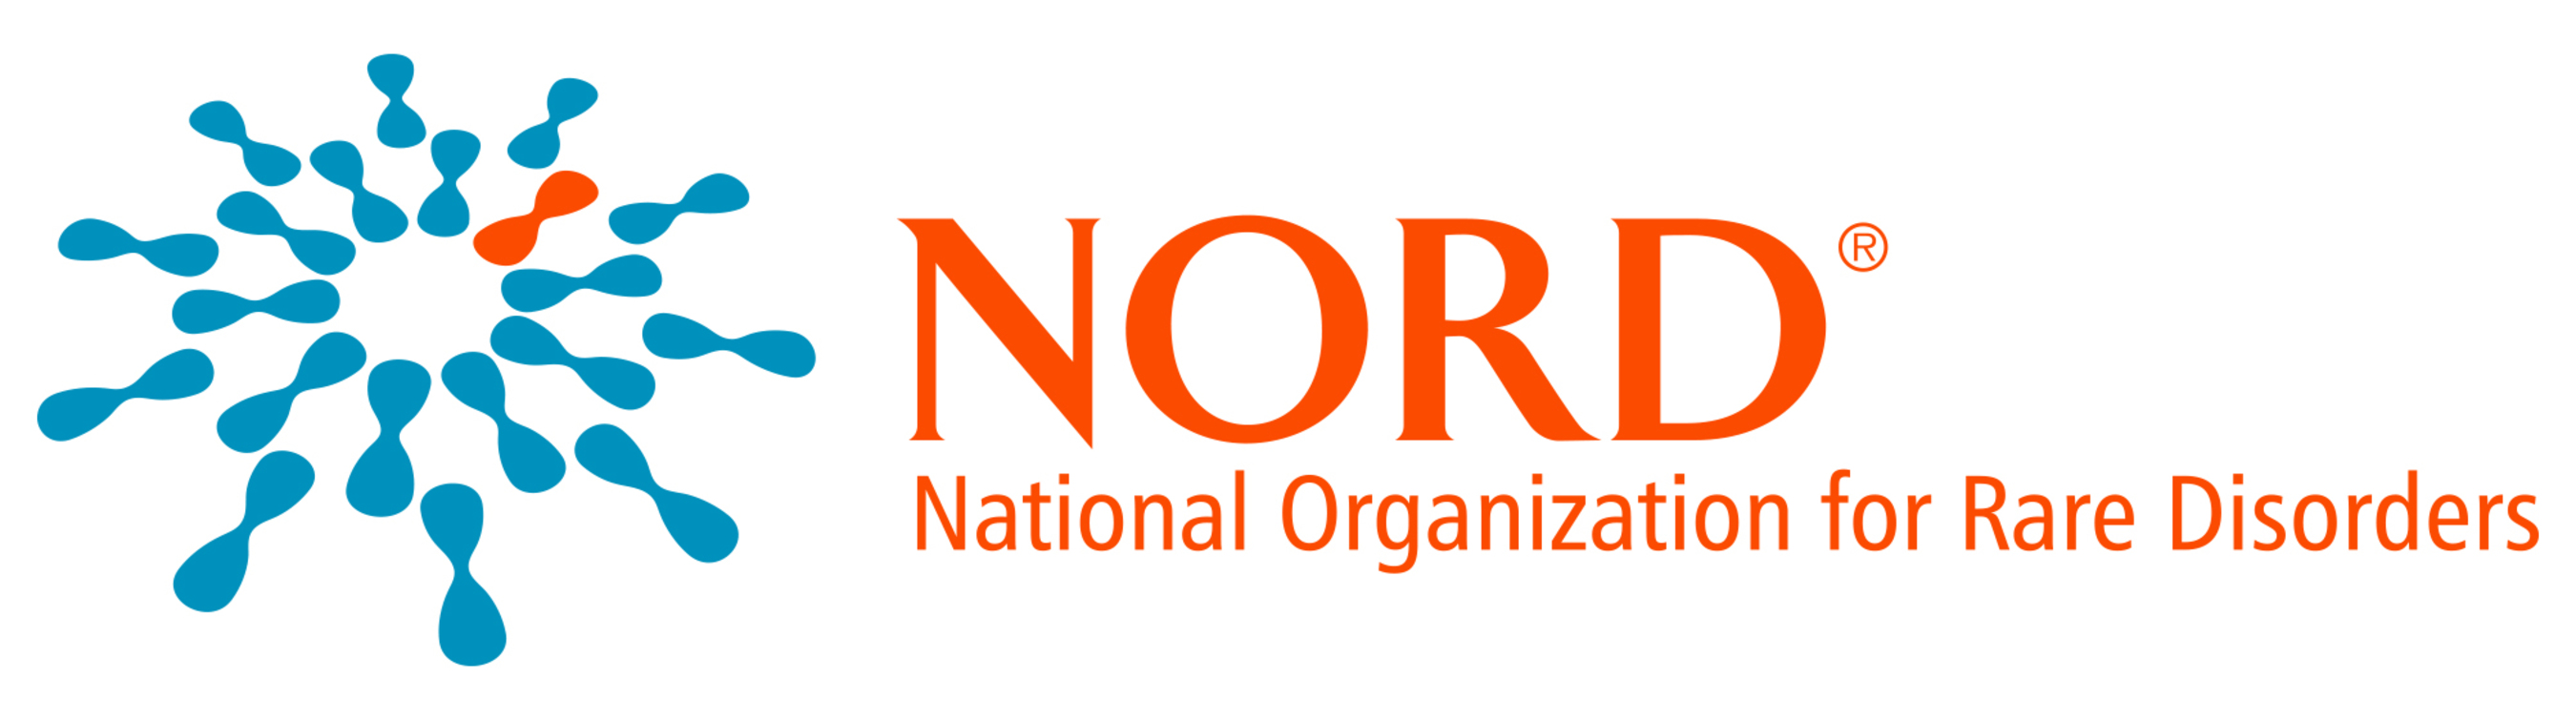 National Organization for Rare Disorders (NORD) logo.